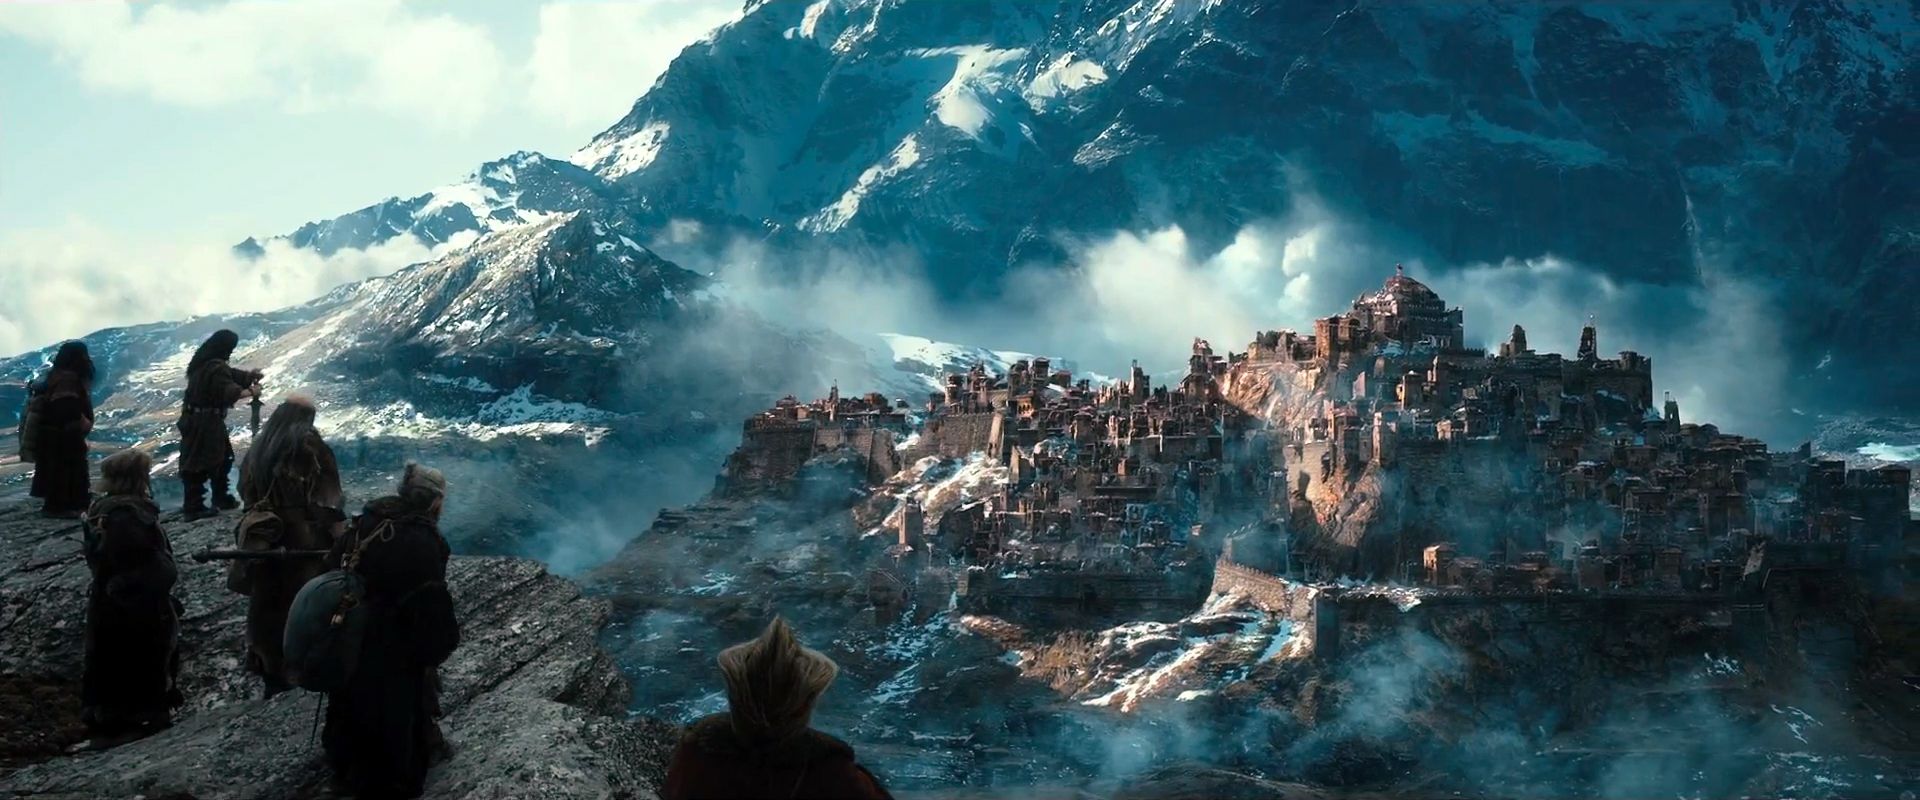 The Hobbit: The Desolation Of Smaug Trailer Photo #1